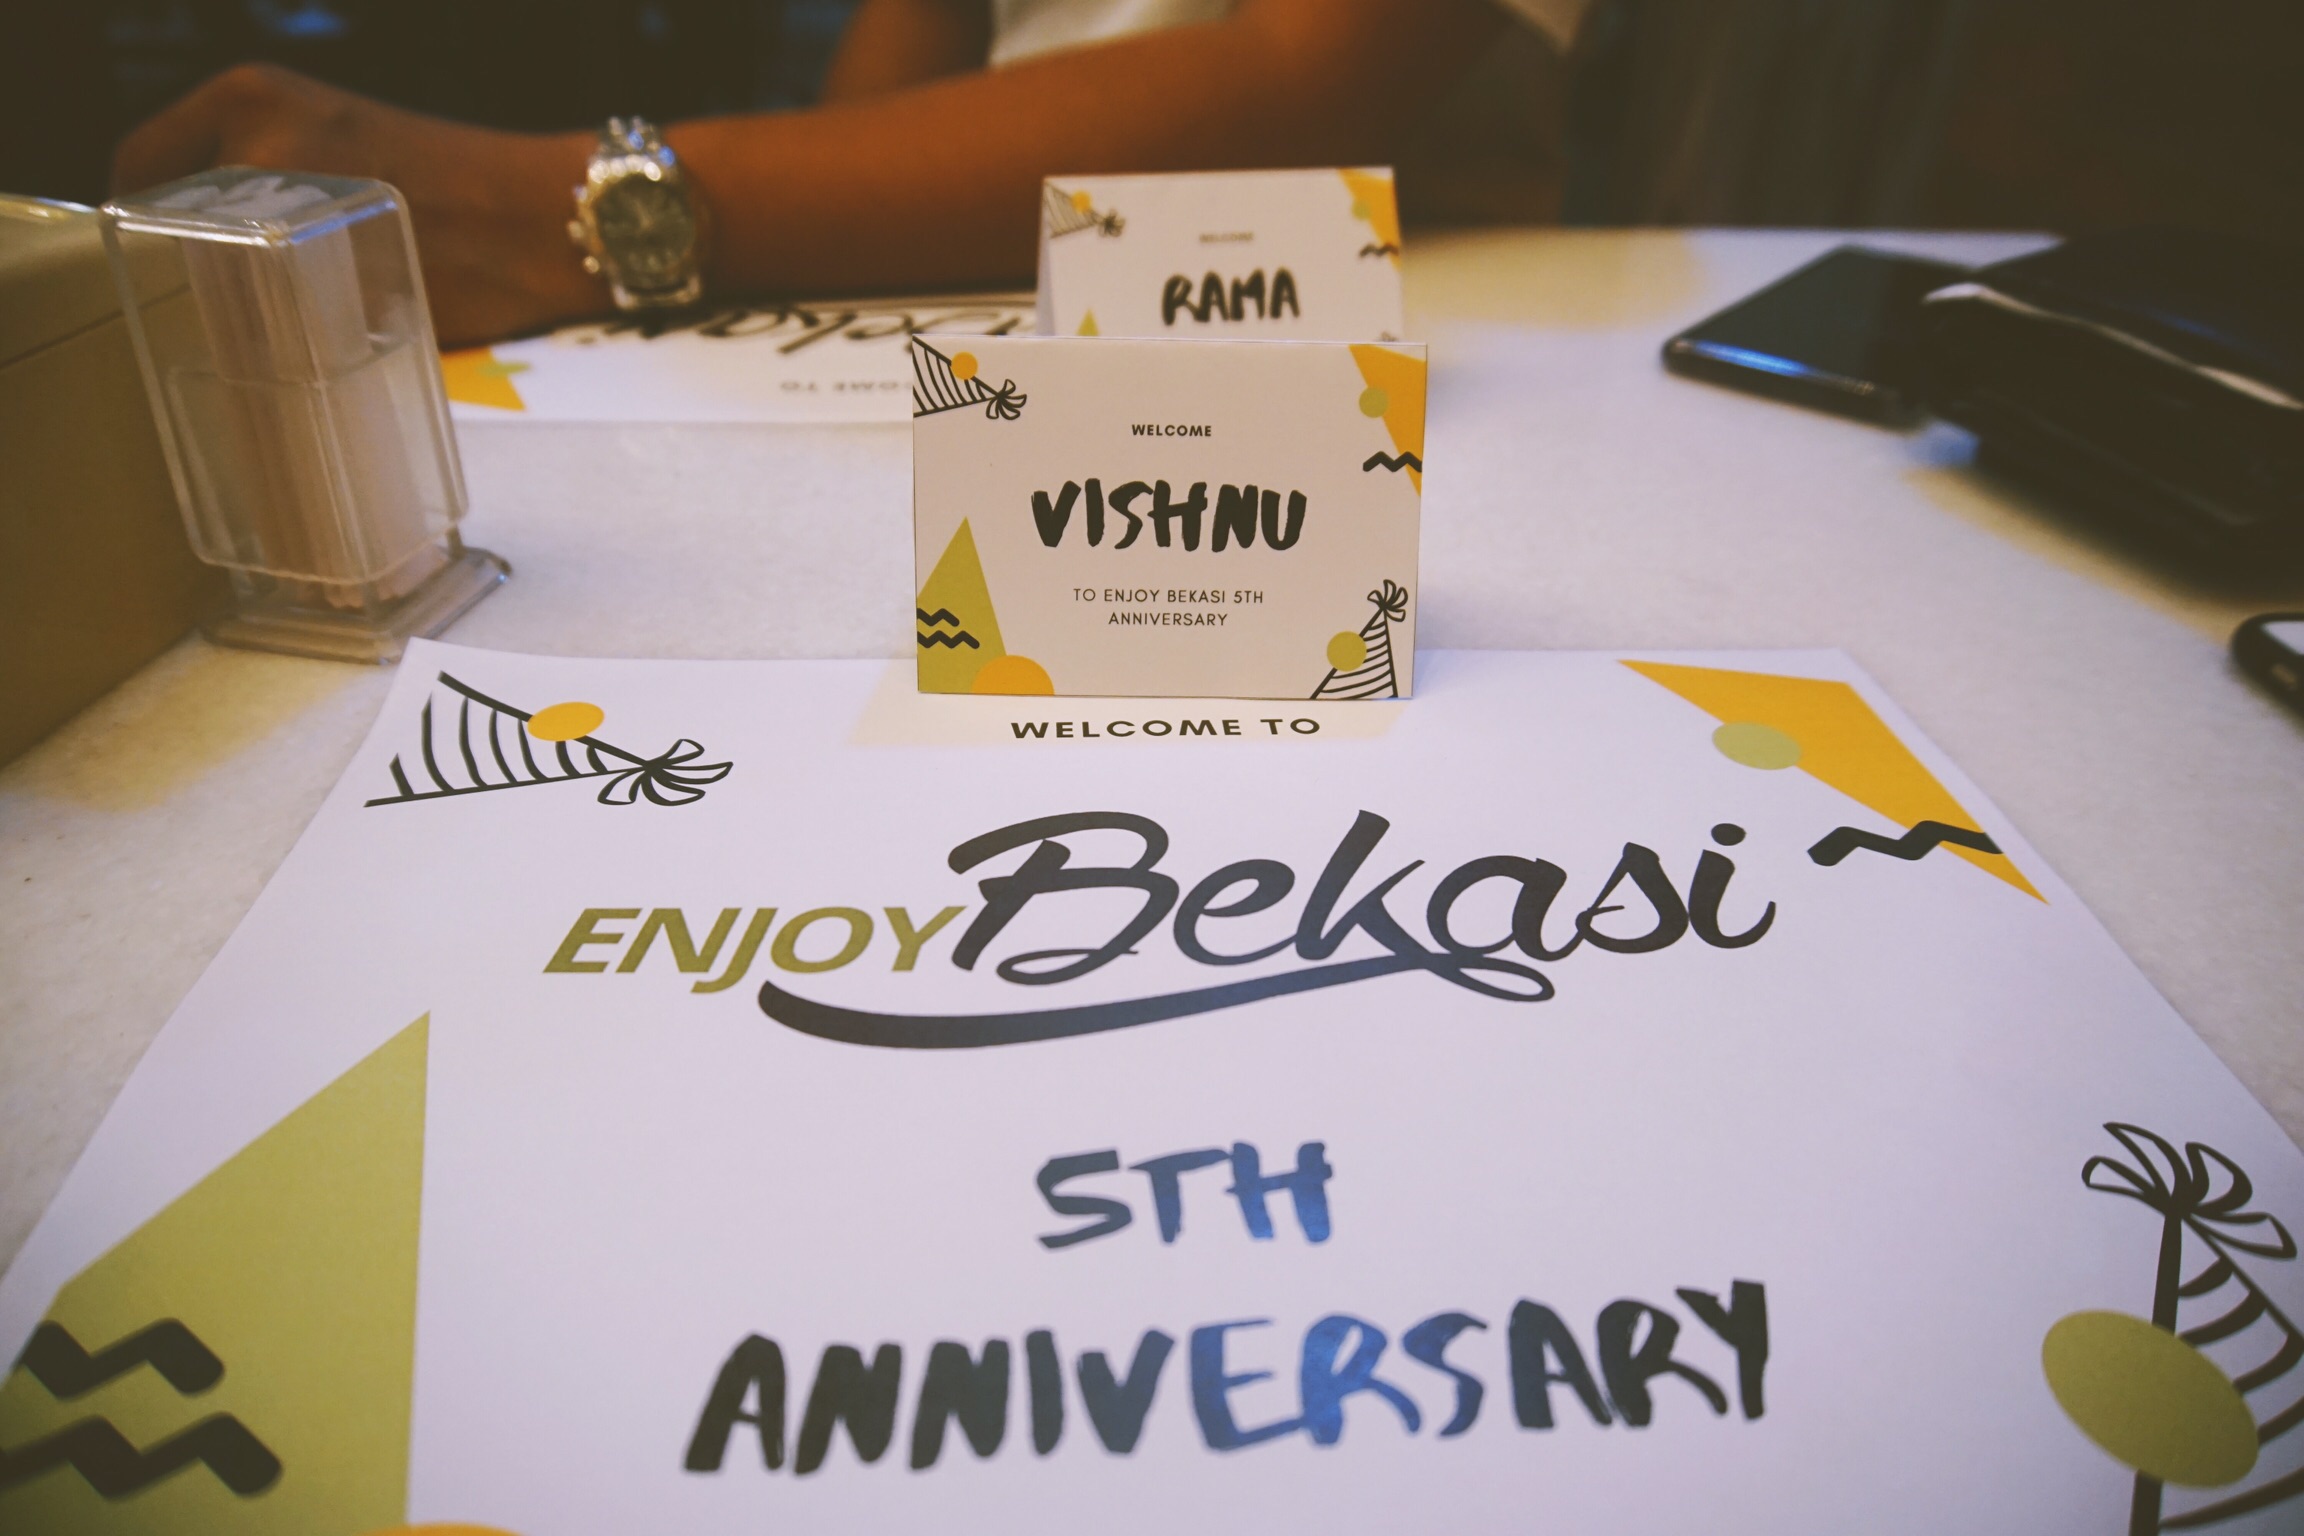 Enjoy Bekasi 5th Anniversary